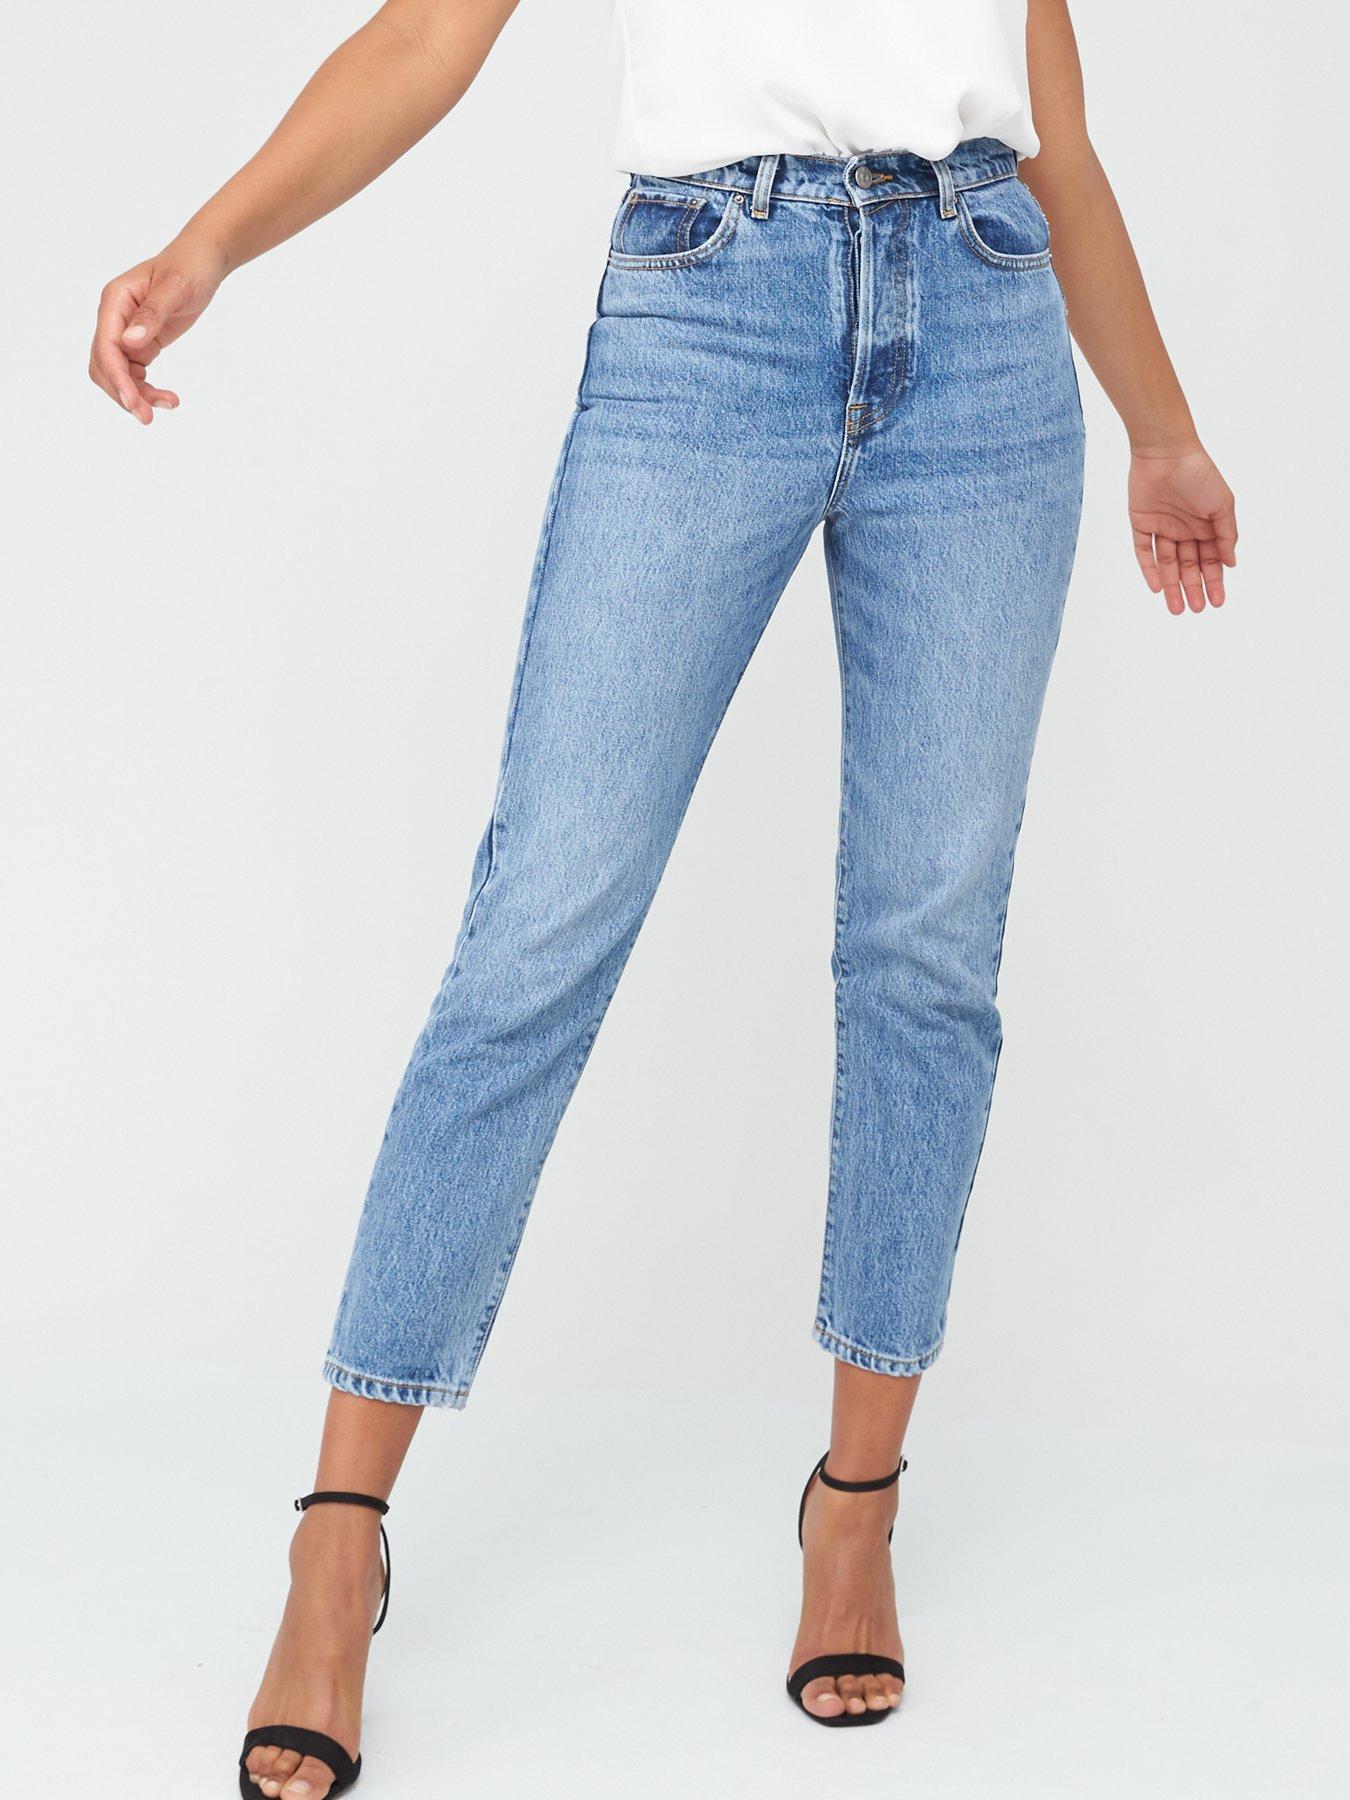 Slim Jeans | V by very | Jeans | Women 